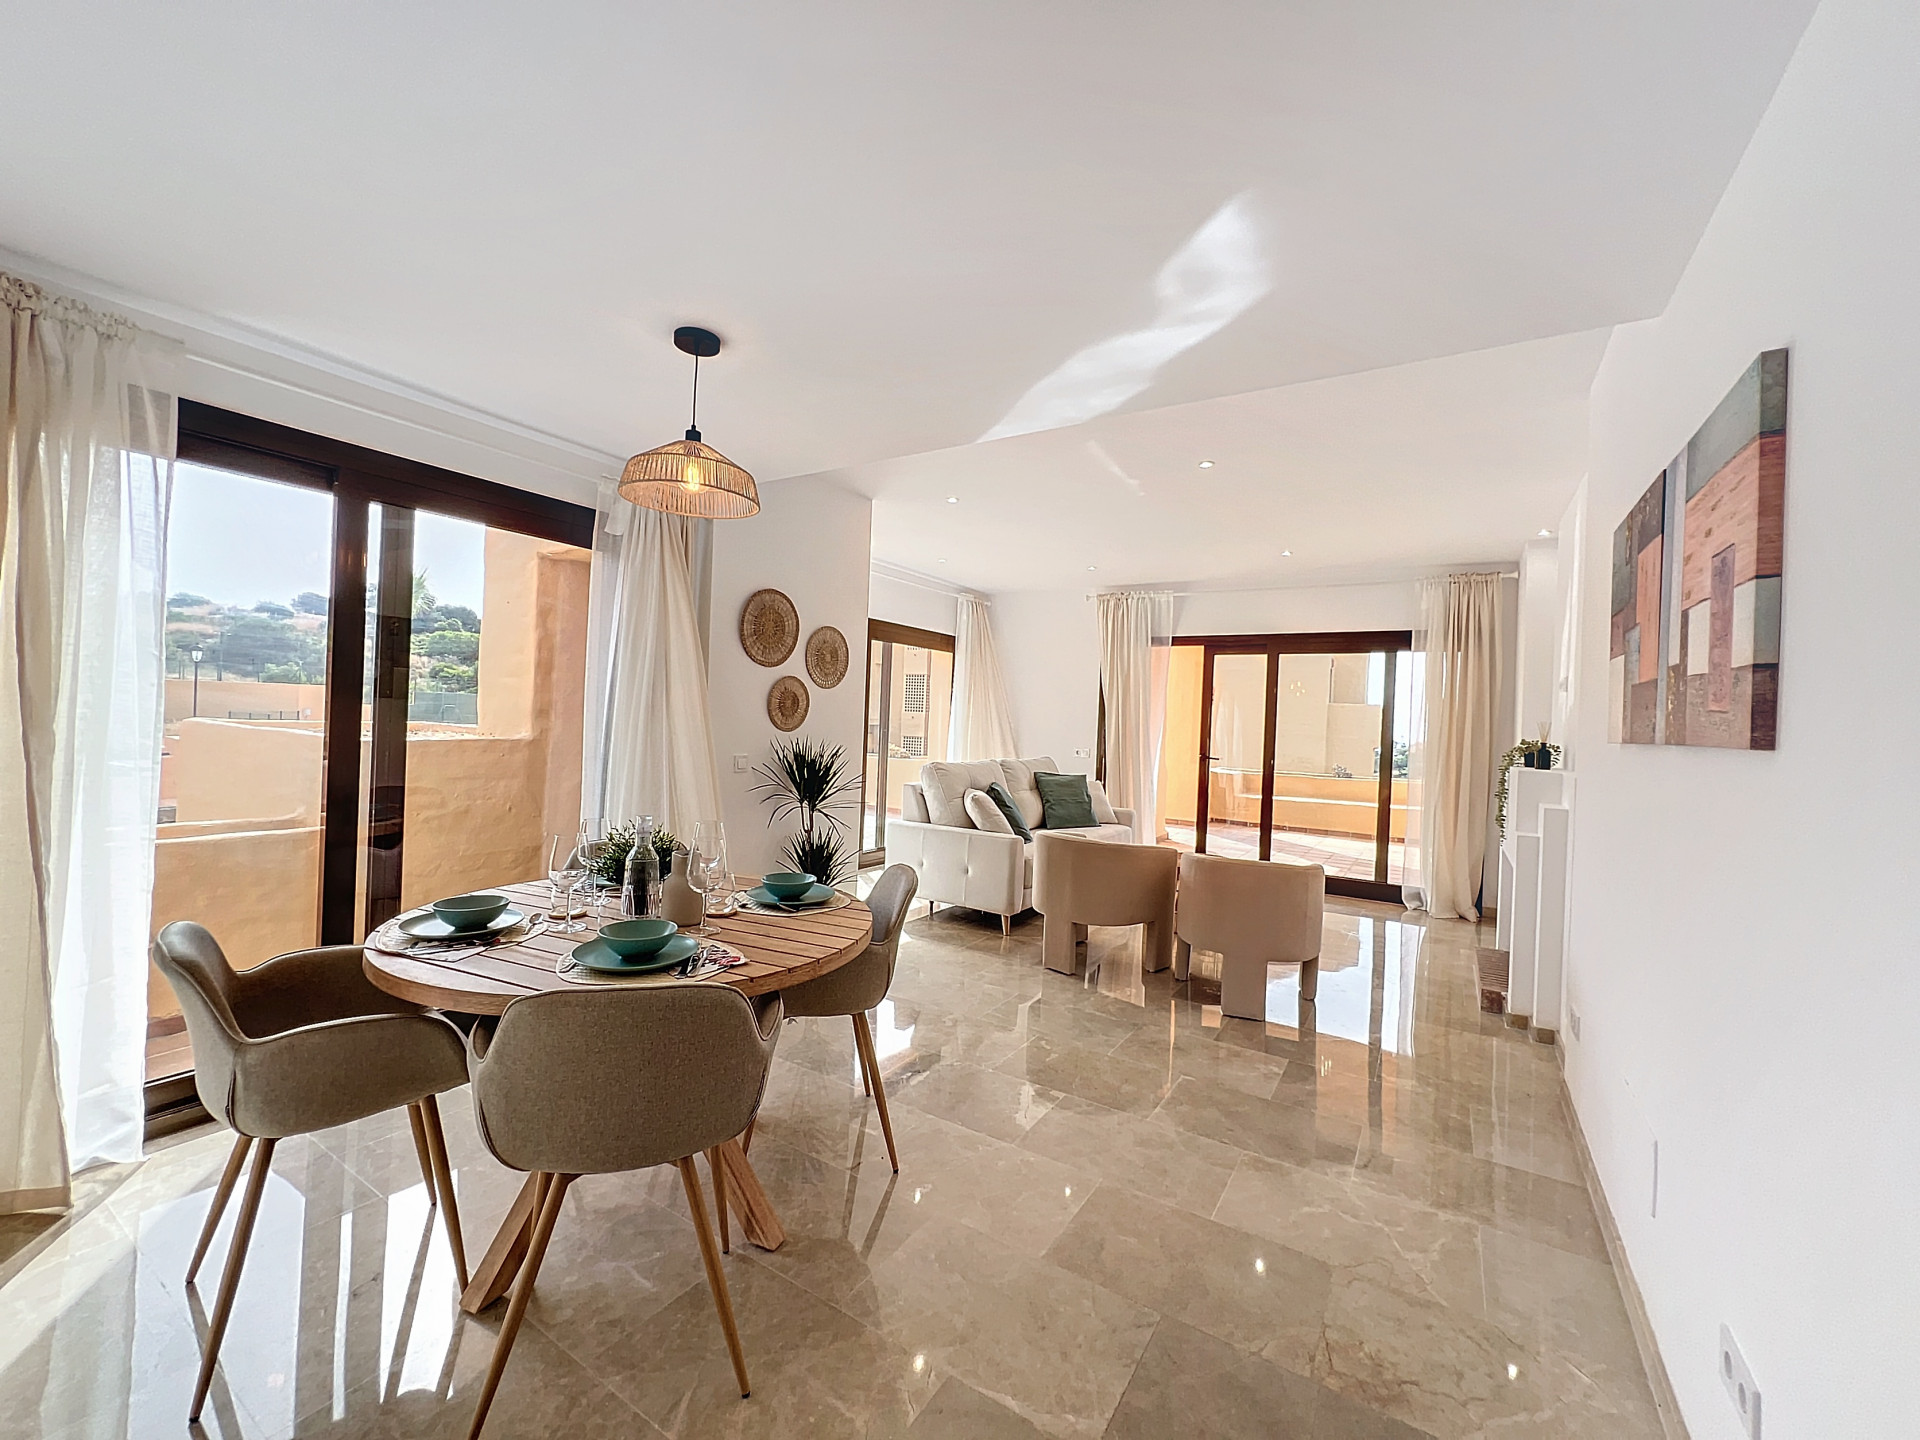 Luxury flat located in the exclusive area of La Duquesa, Manilva.